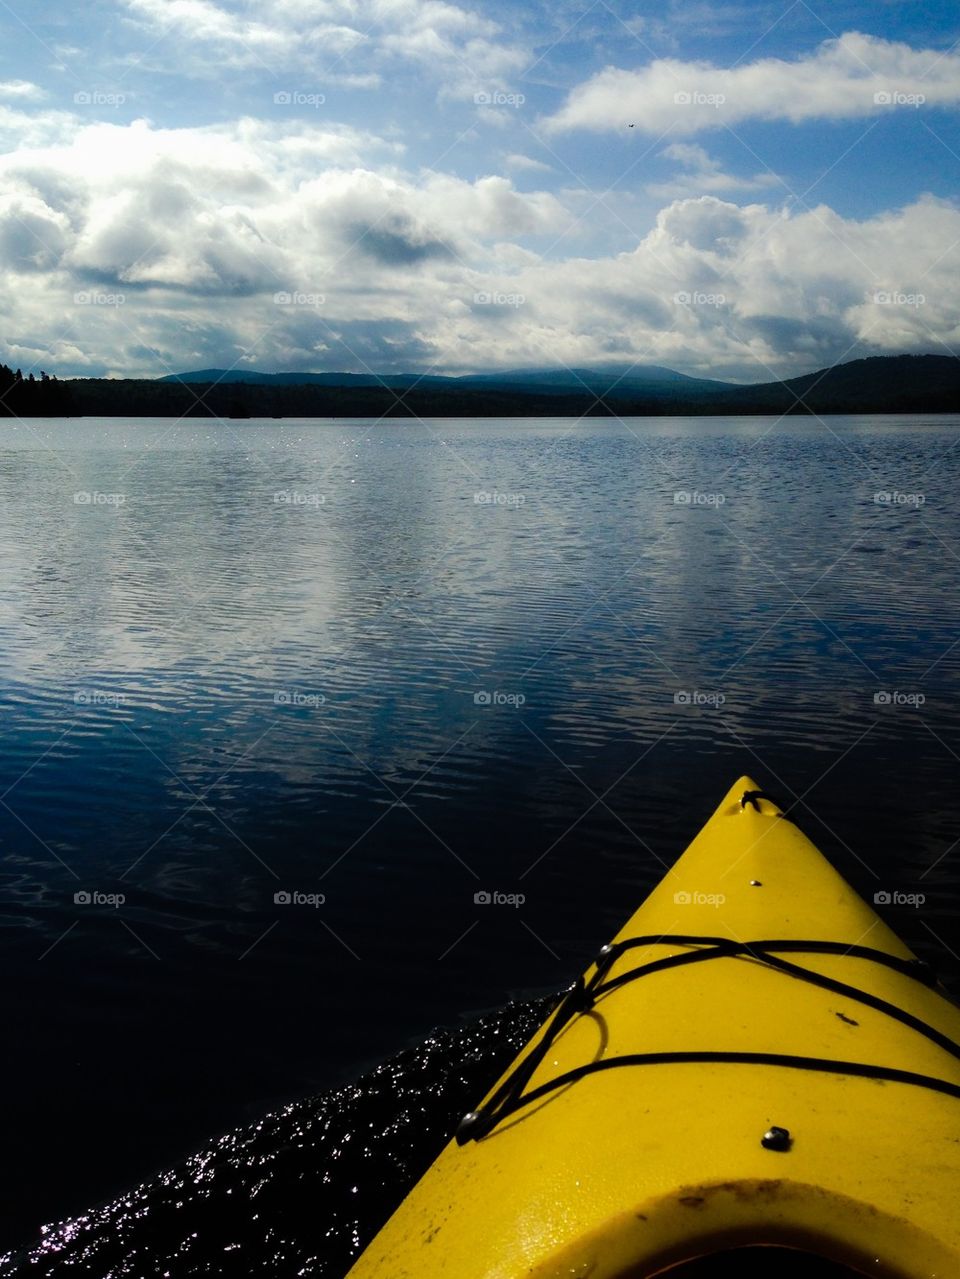 Rangeley Lake, Maine